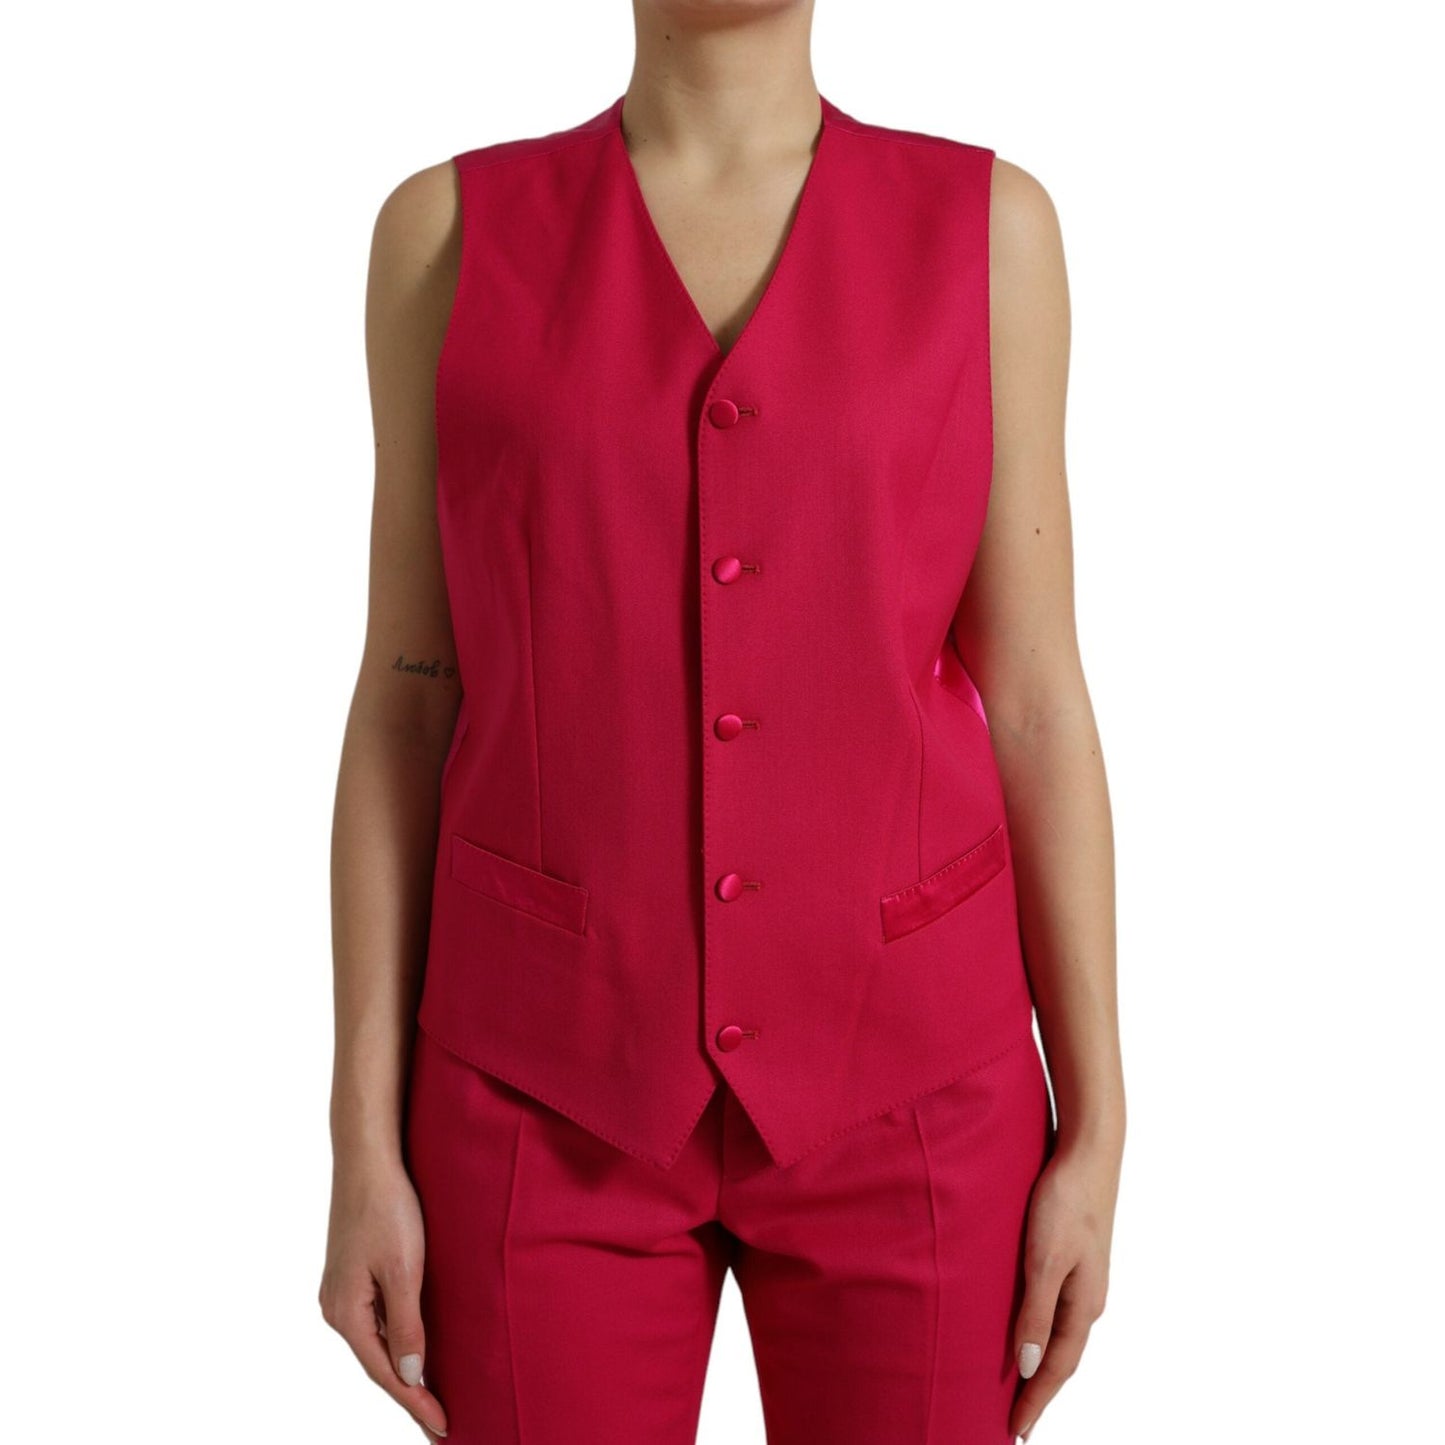 Dolce & Gabbana Elegant Red Slim Fit 3 Piece Martini Suit red-martini-wool-slim-fit-3-piece-suit